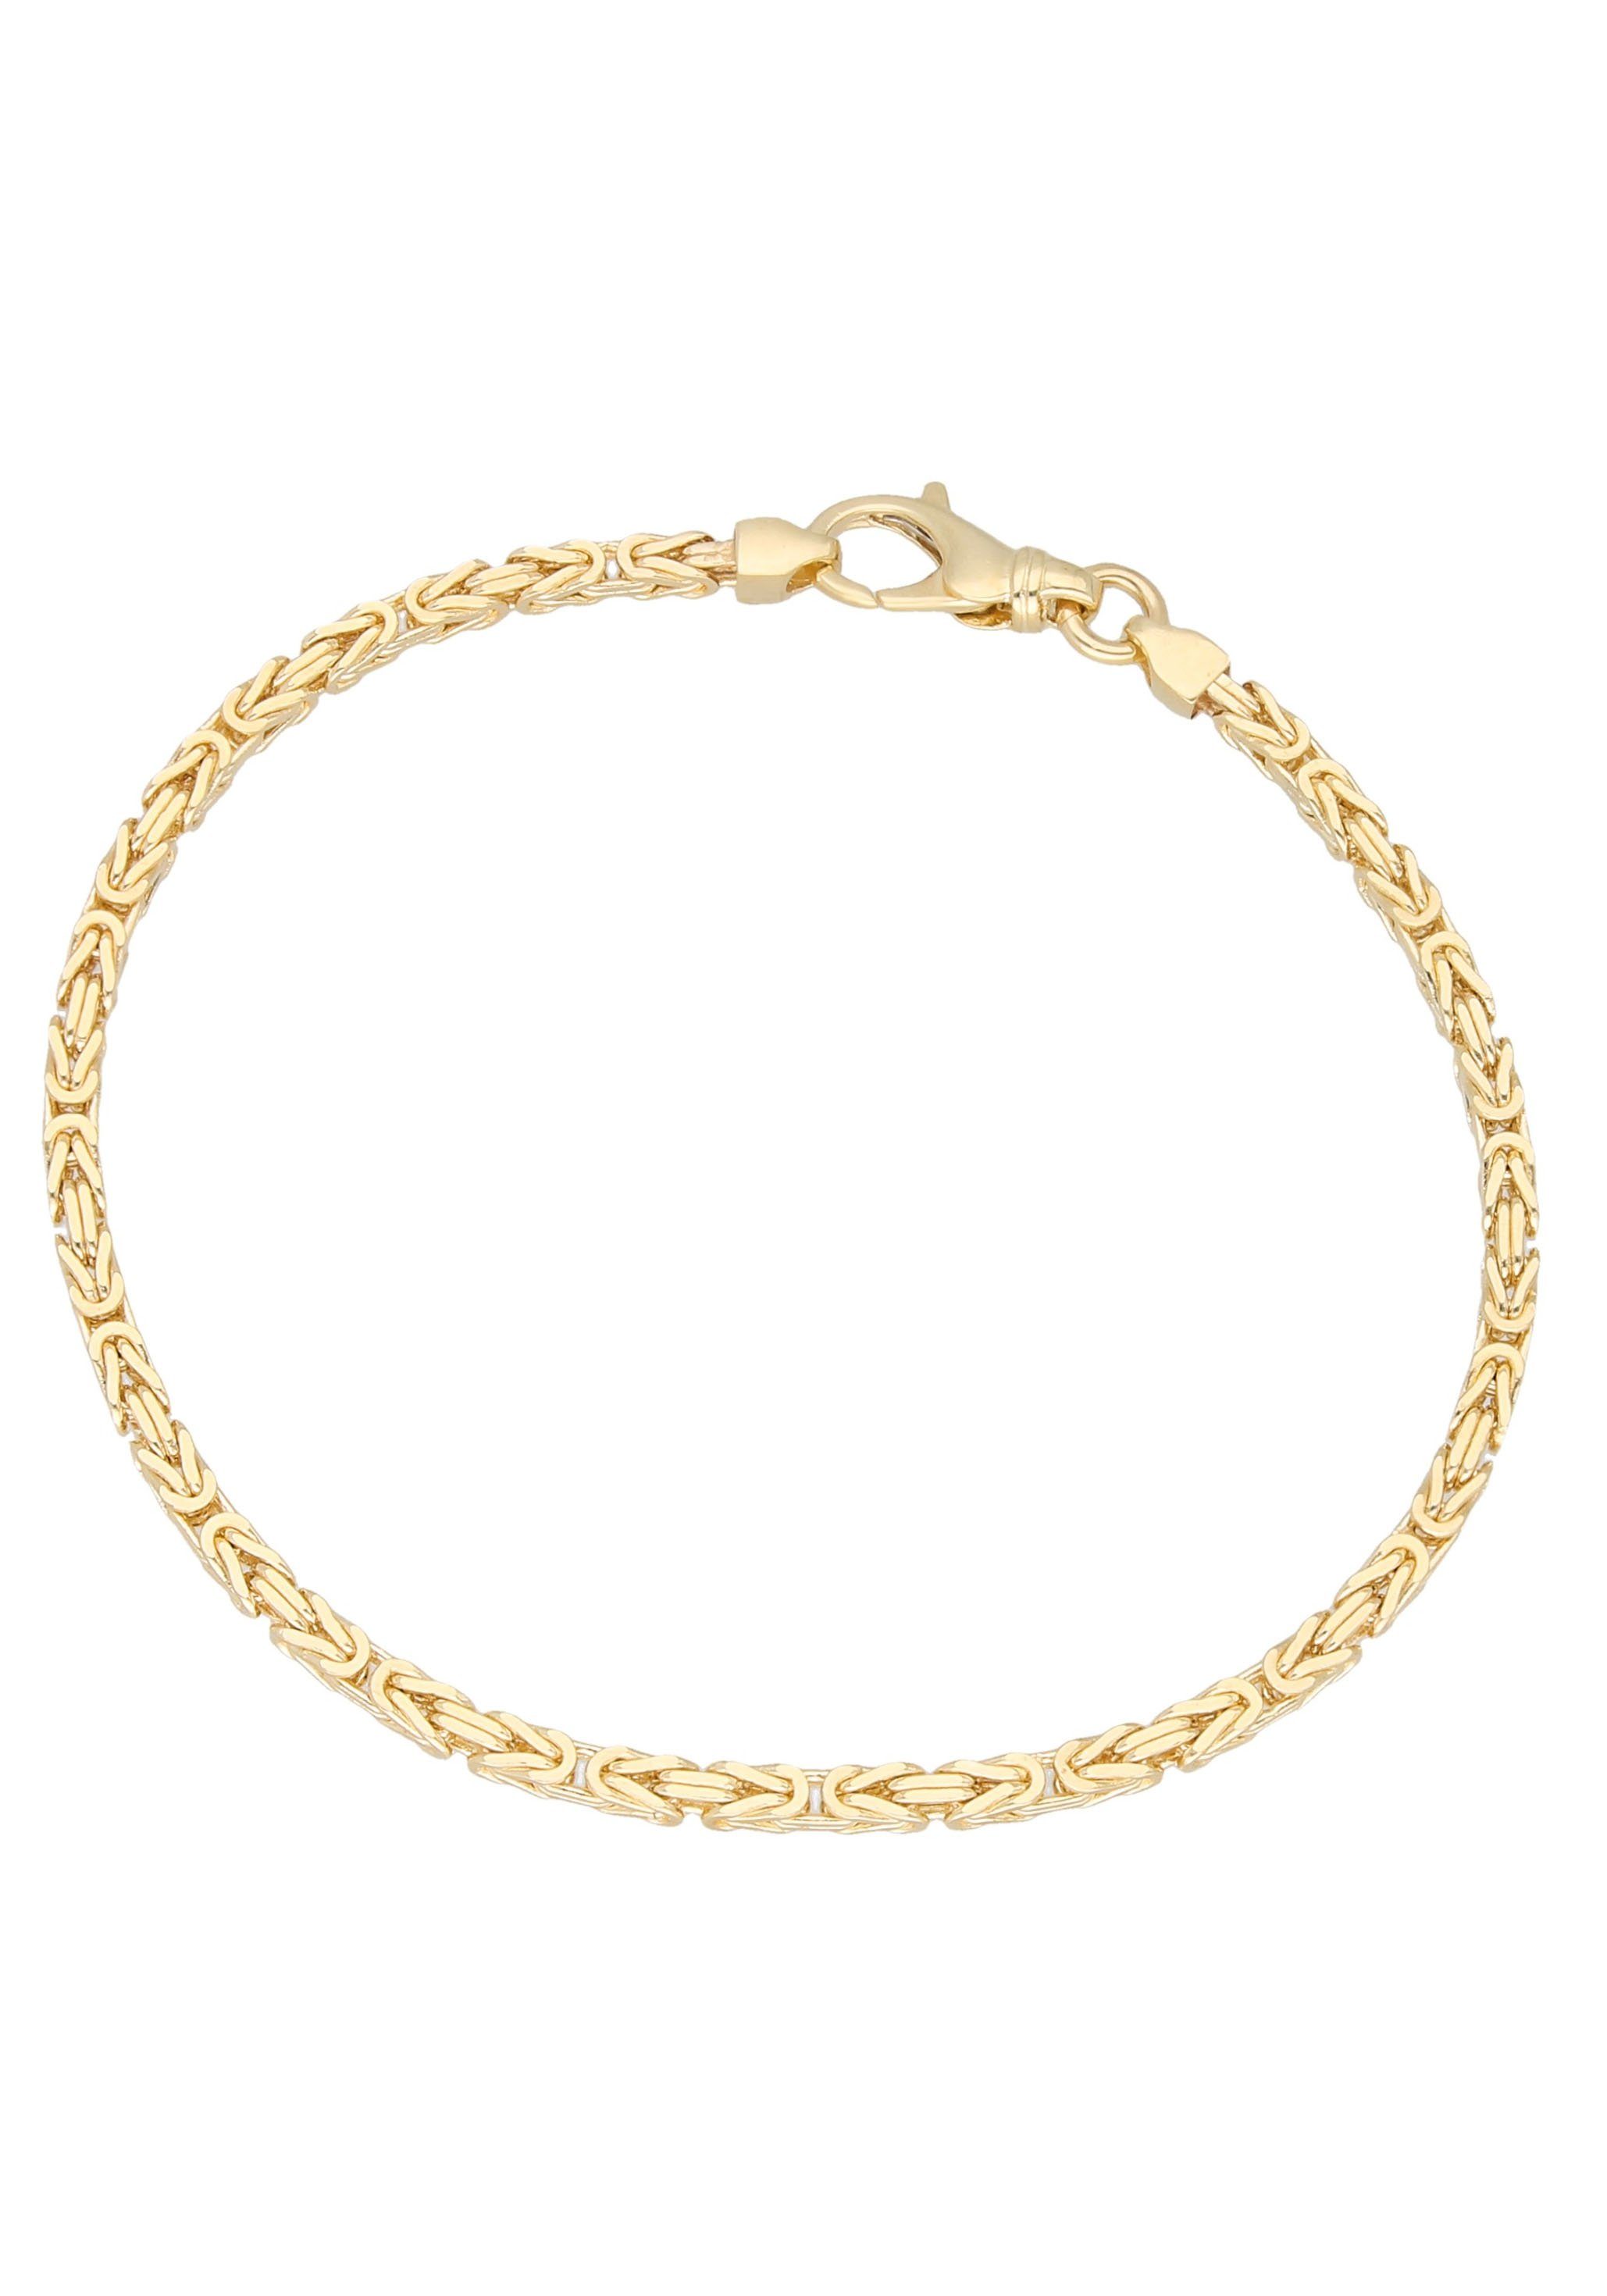 Firetti Goldarmband Schmuck Geschenk Gold 375 Armschmuck Armkette Goldarmband Königskette, zu Hoodie, Kleid, Shirt, Jeans, Sneaker! Anlass Geburtstag Weihnachten | Goldarmbänder